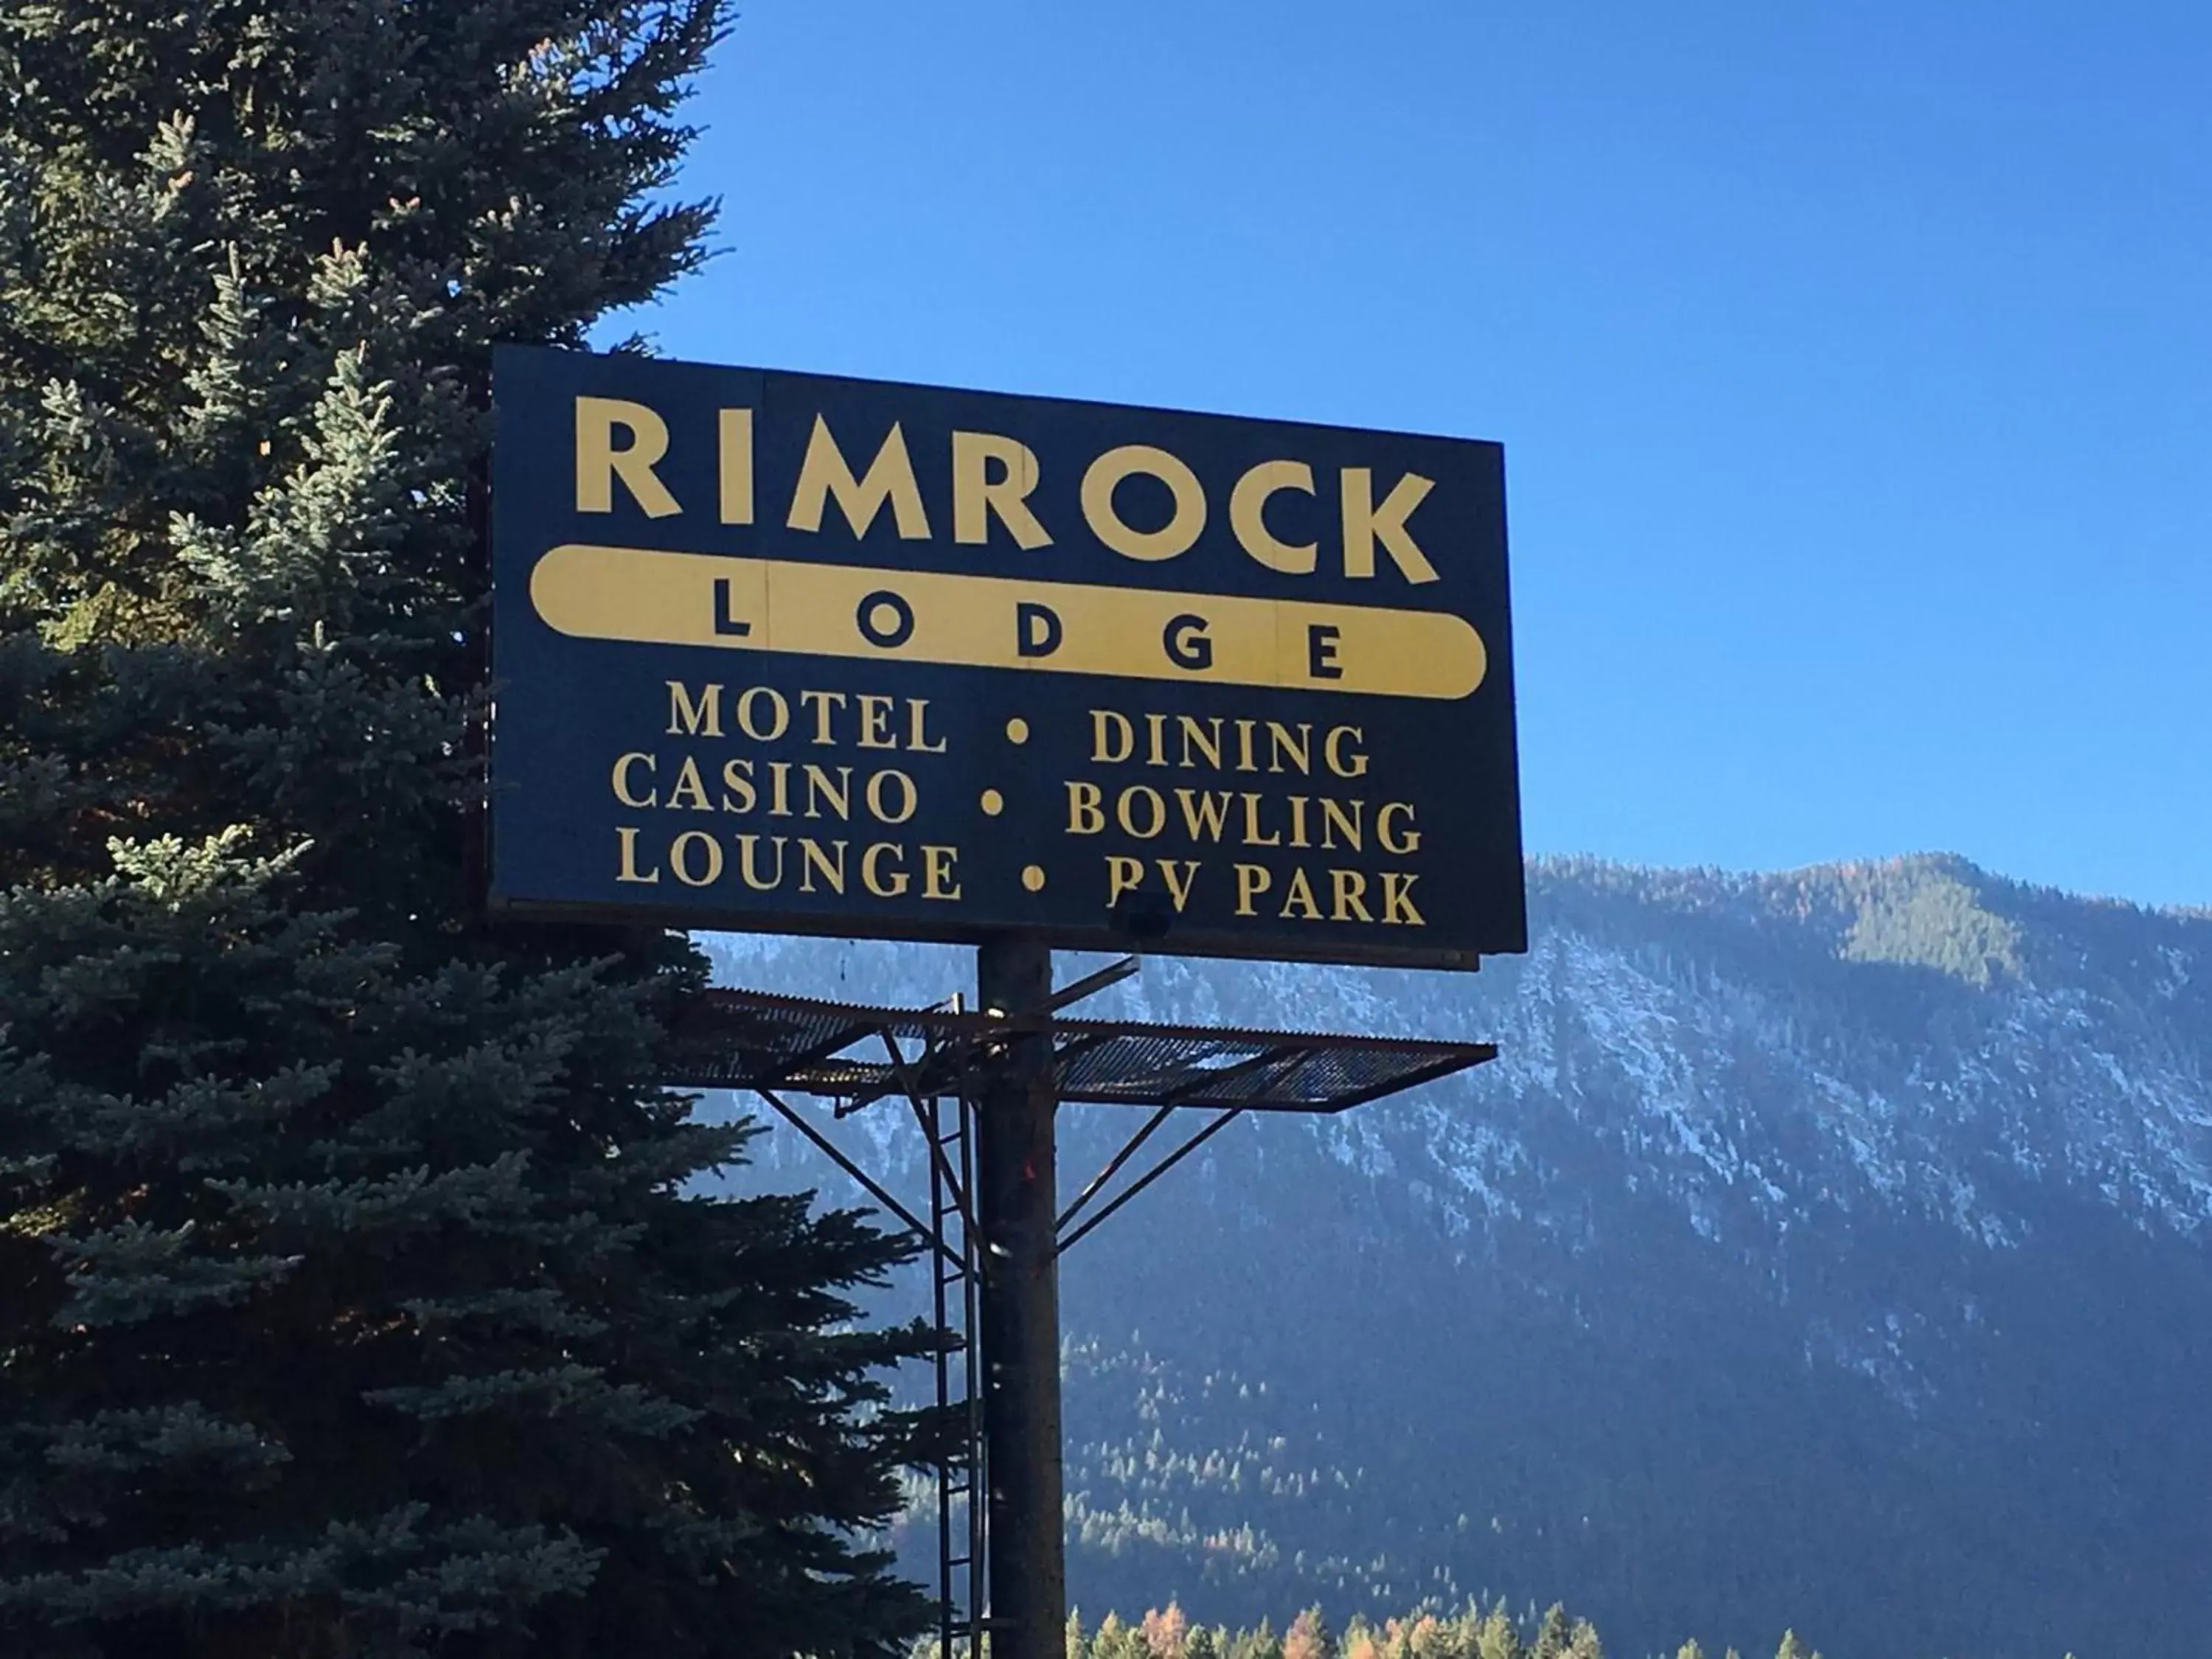 Property logo or sign in Rimrock Lodge LLC